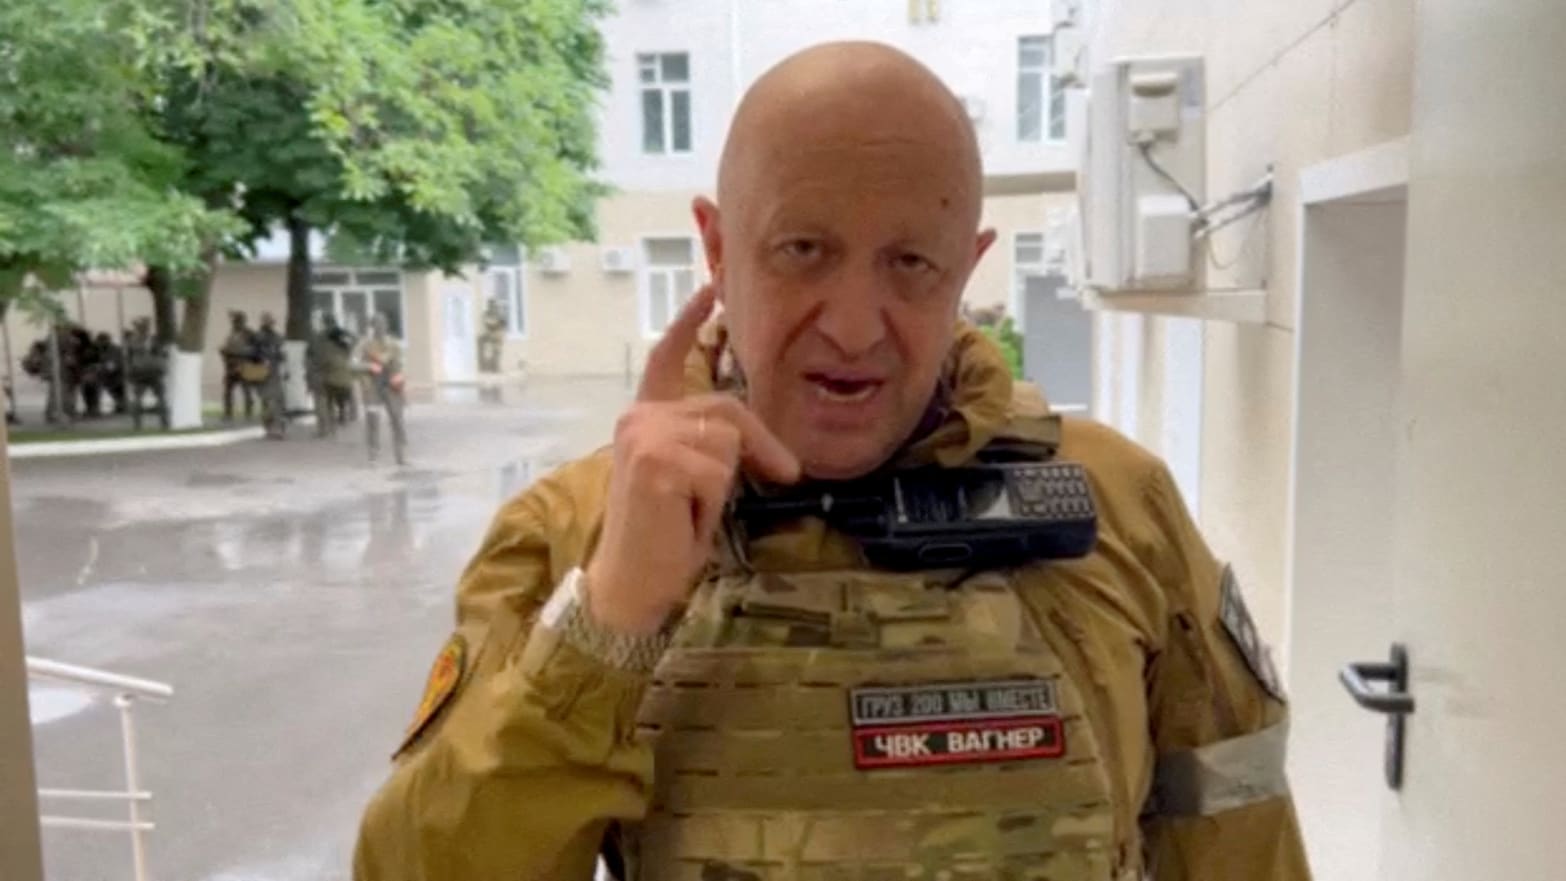 Yevgeny Prigozhin, the longtime Vladimir Putin ally-turned-mercenary boss who staged a violent uprising last month, told subordinates he “went crazy.”